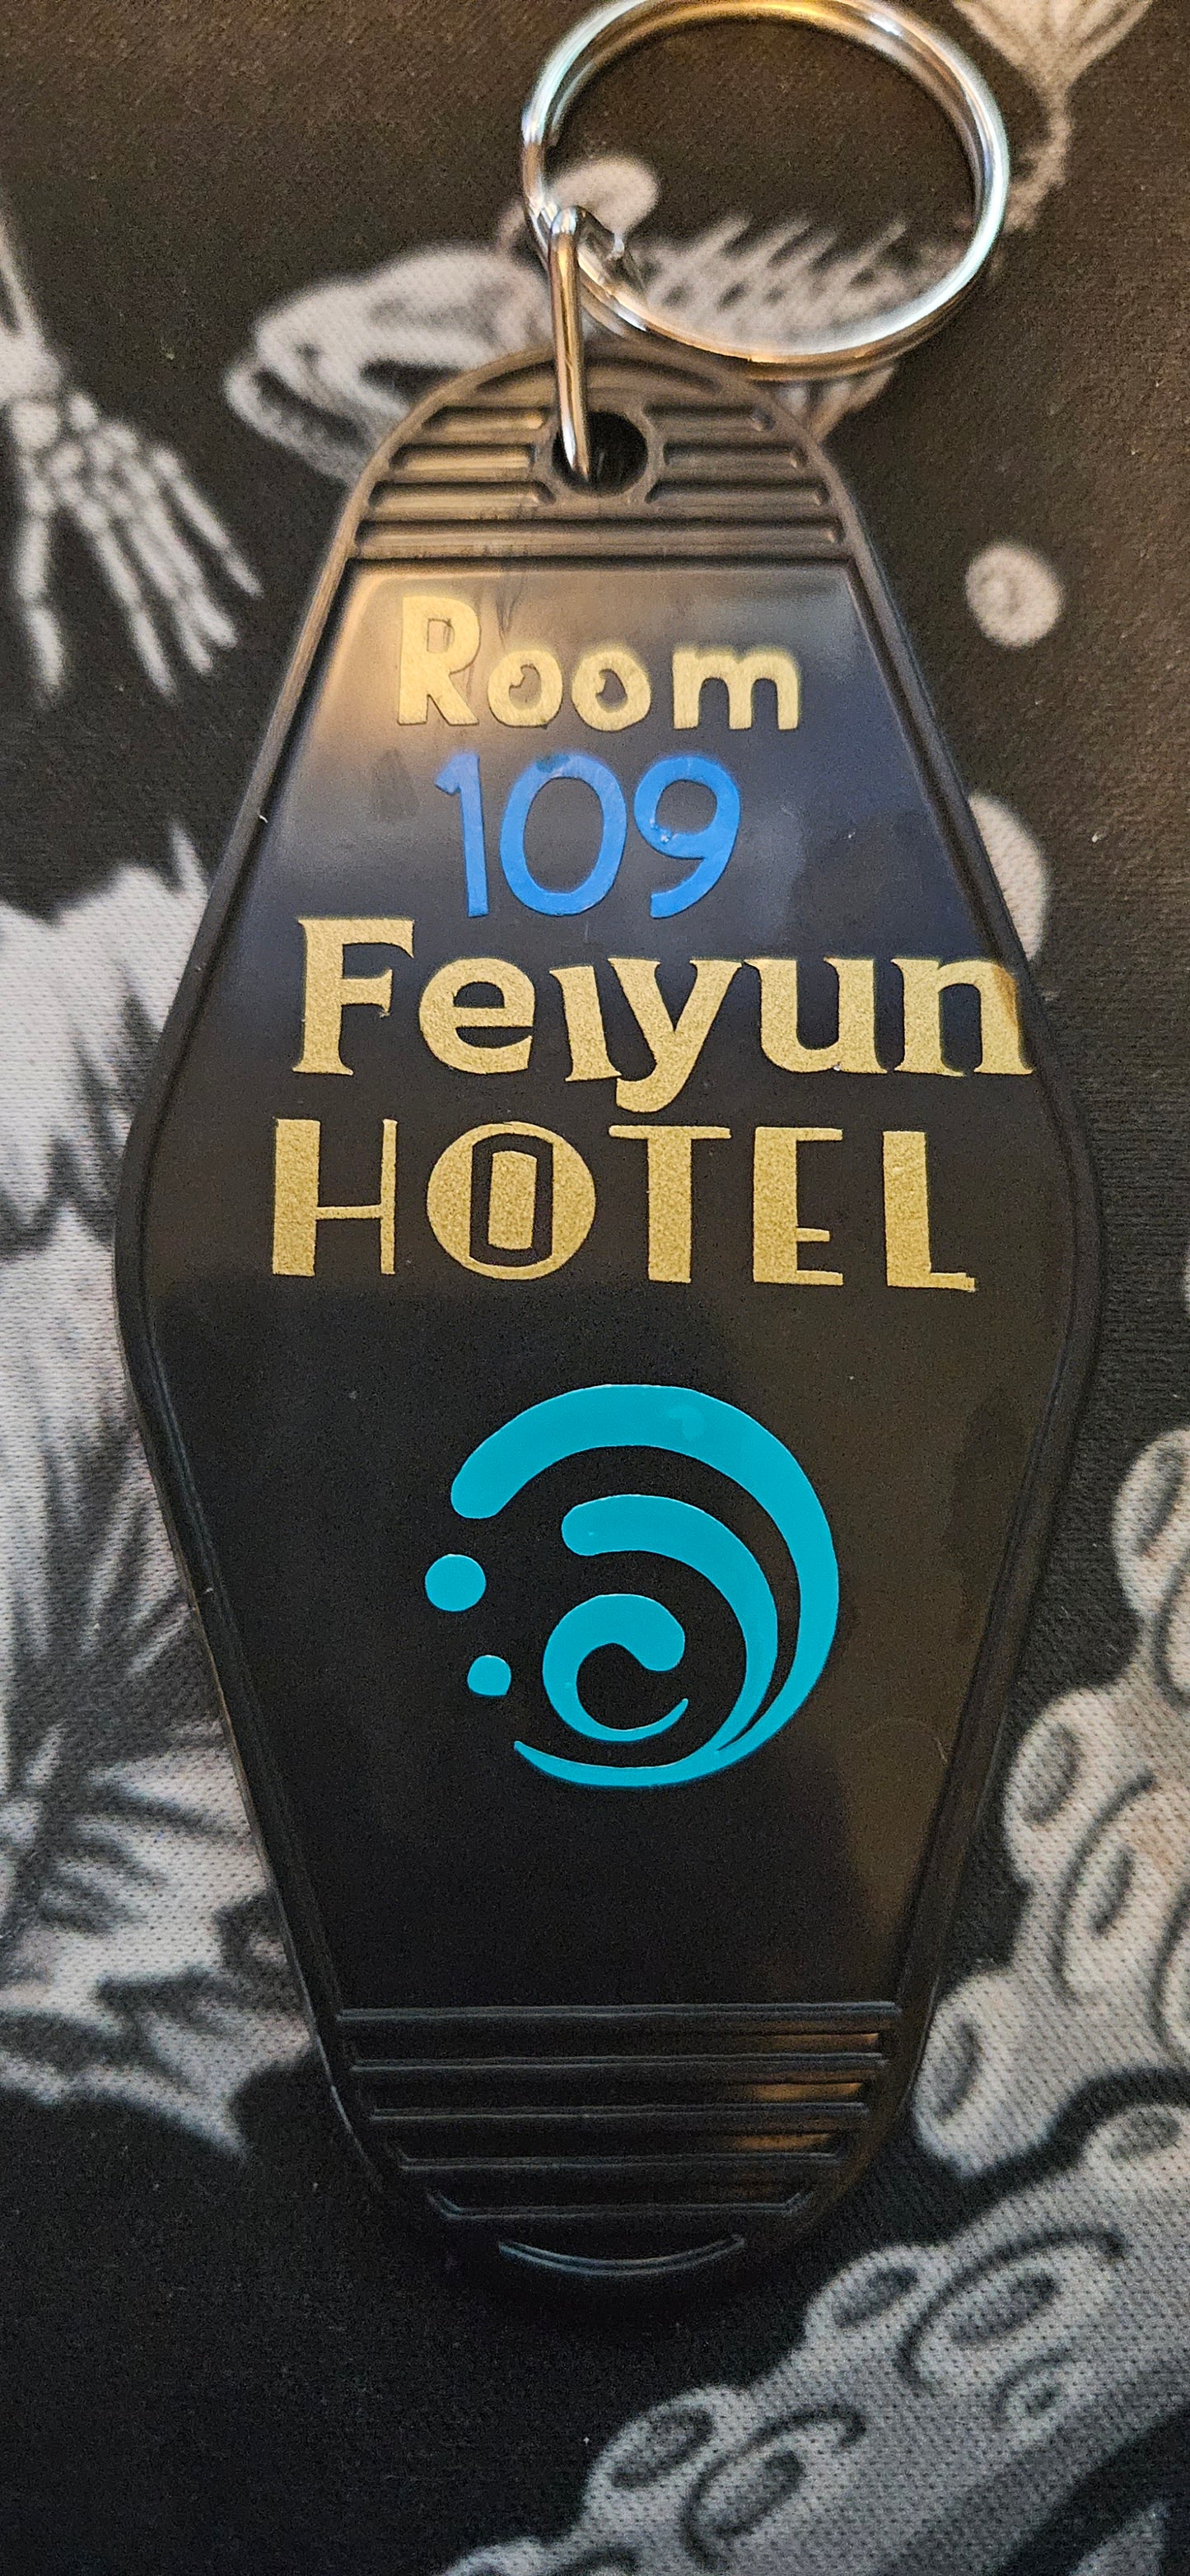 Xingqiu Hotel Keychain